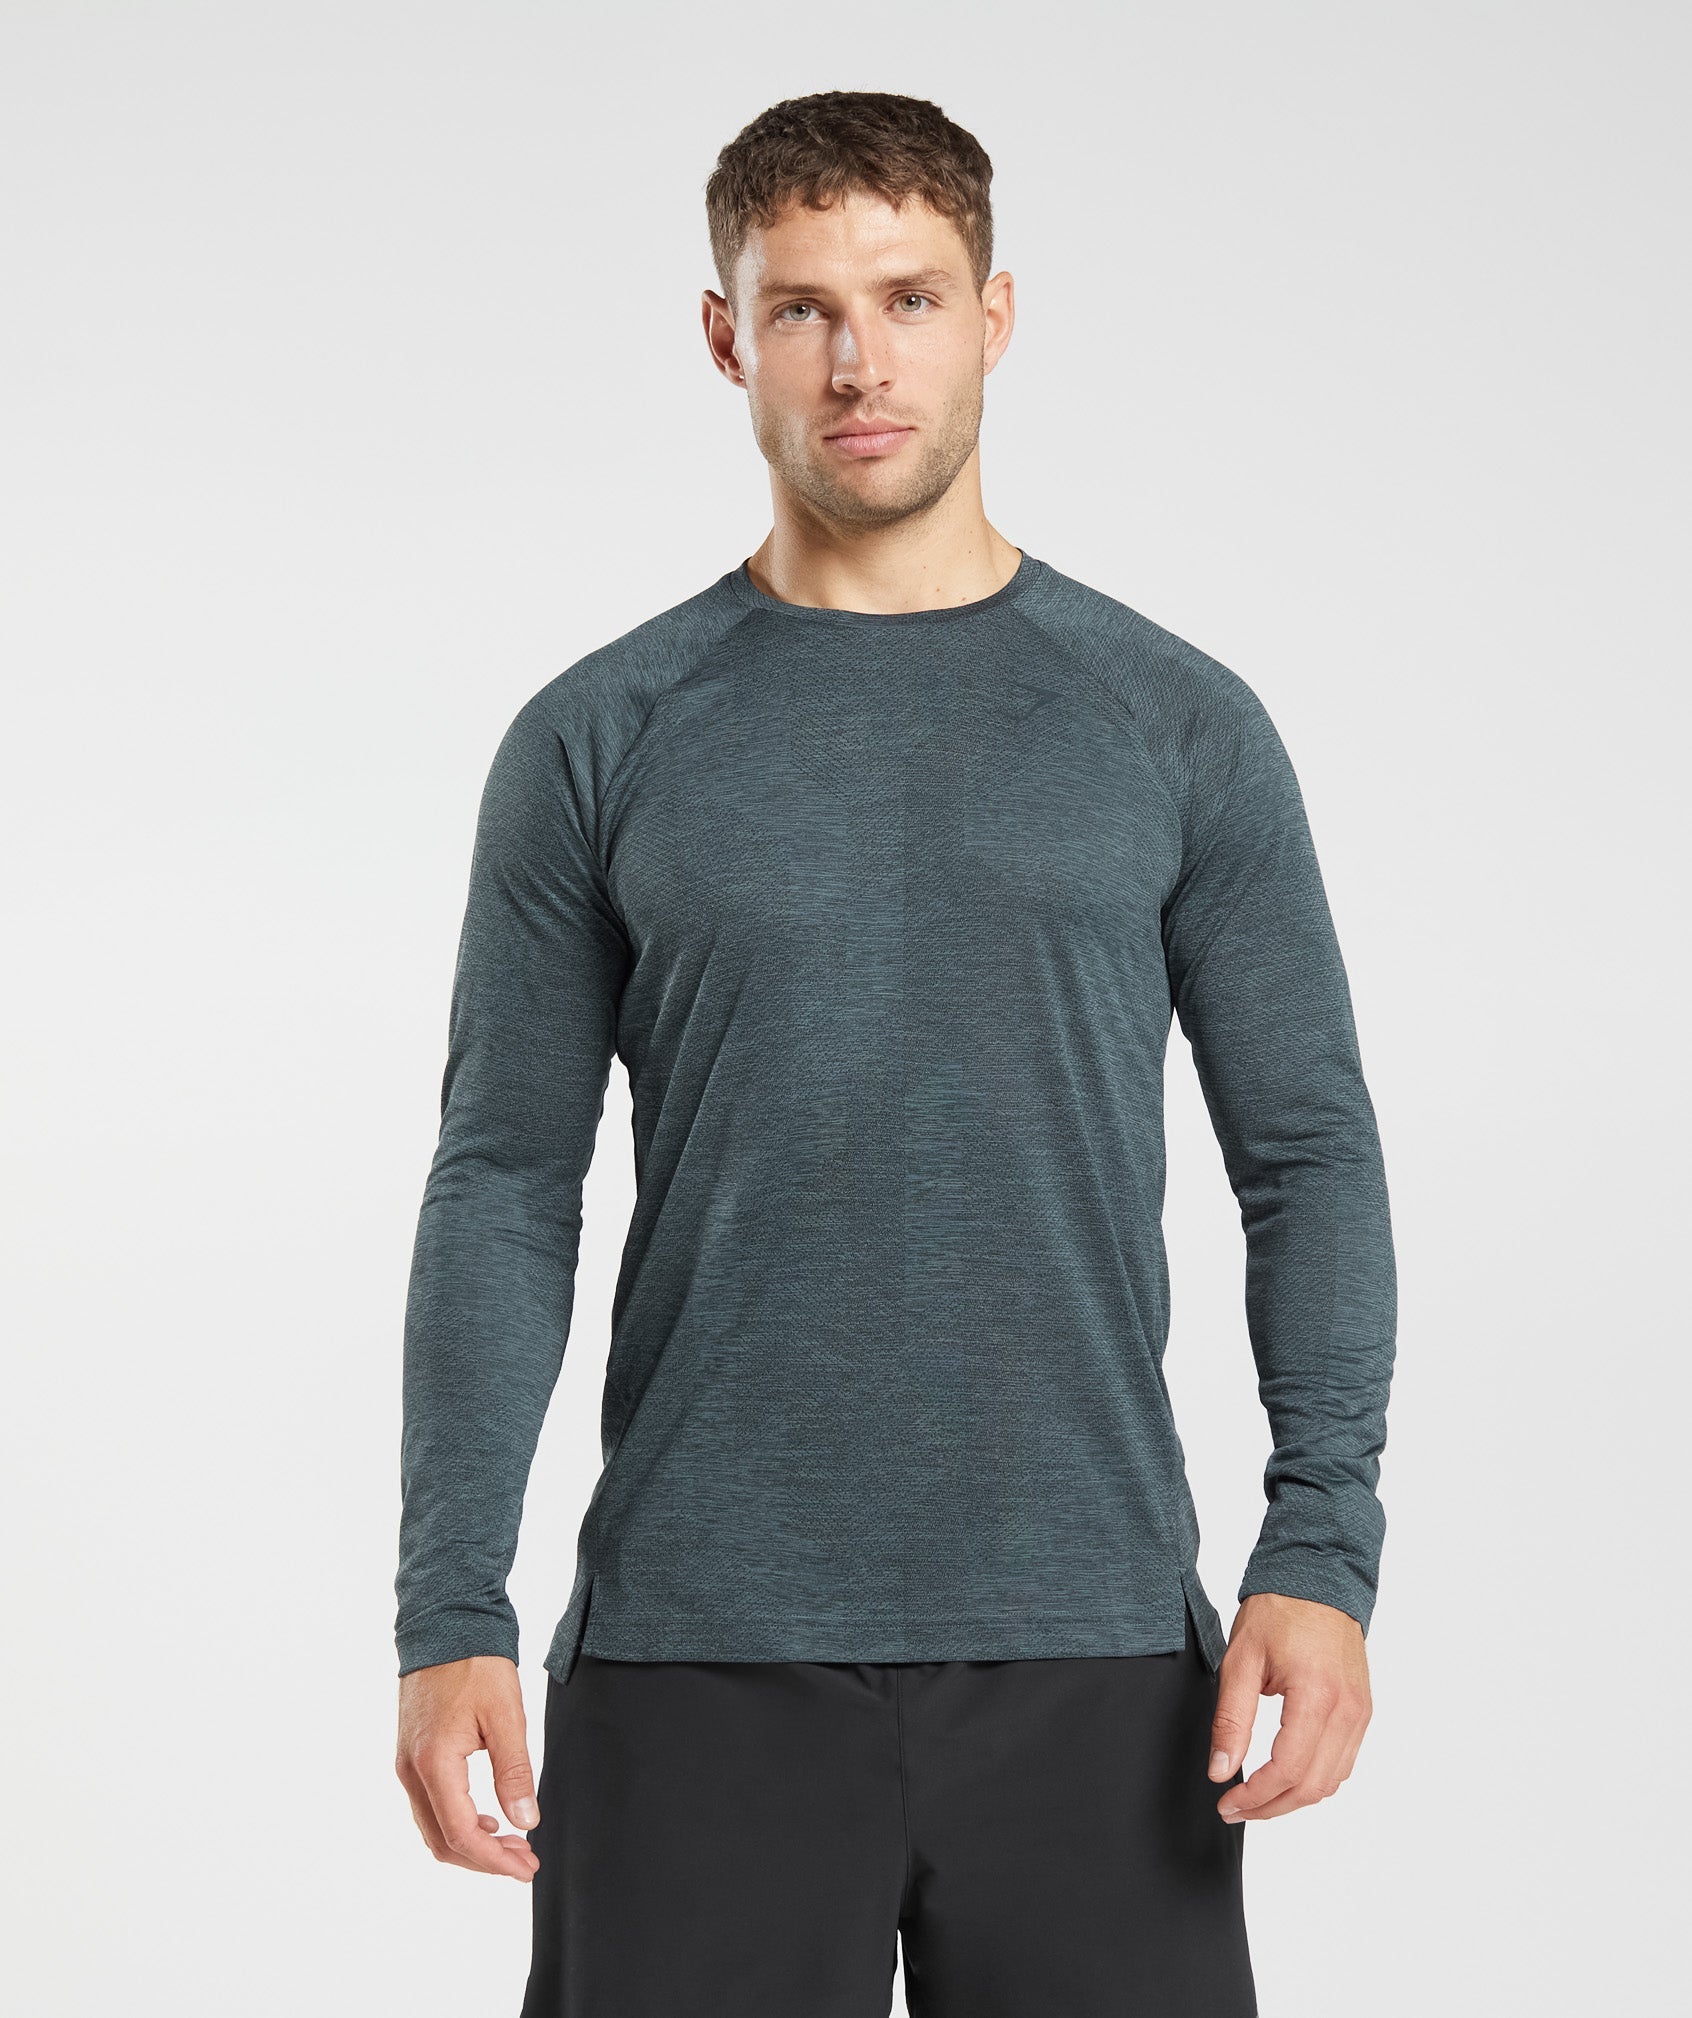 Gymshark Geo Seamless Long Sleeve T-Shirt - Pebble Grey/Cement